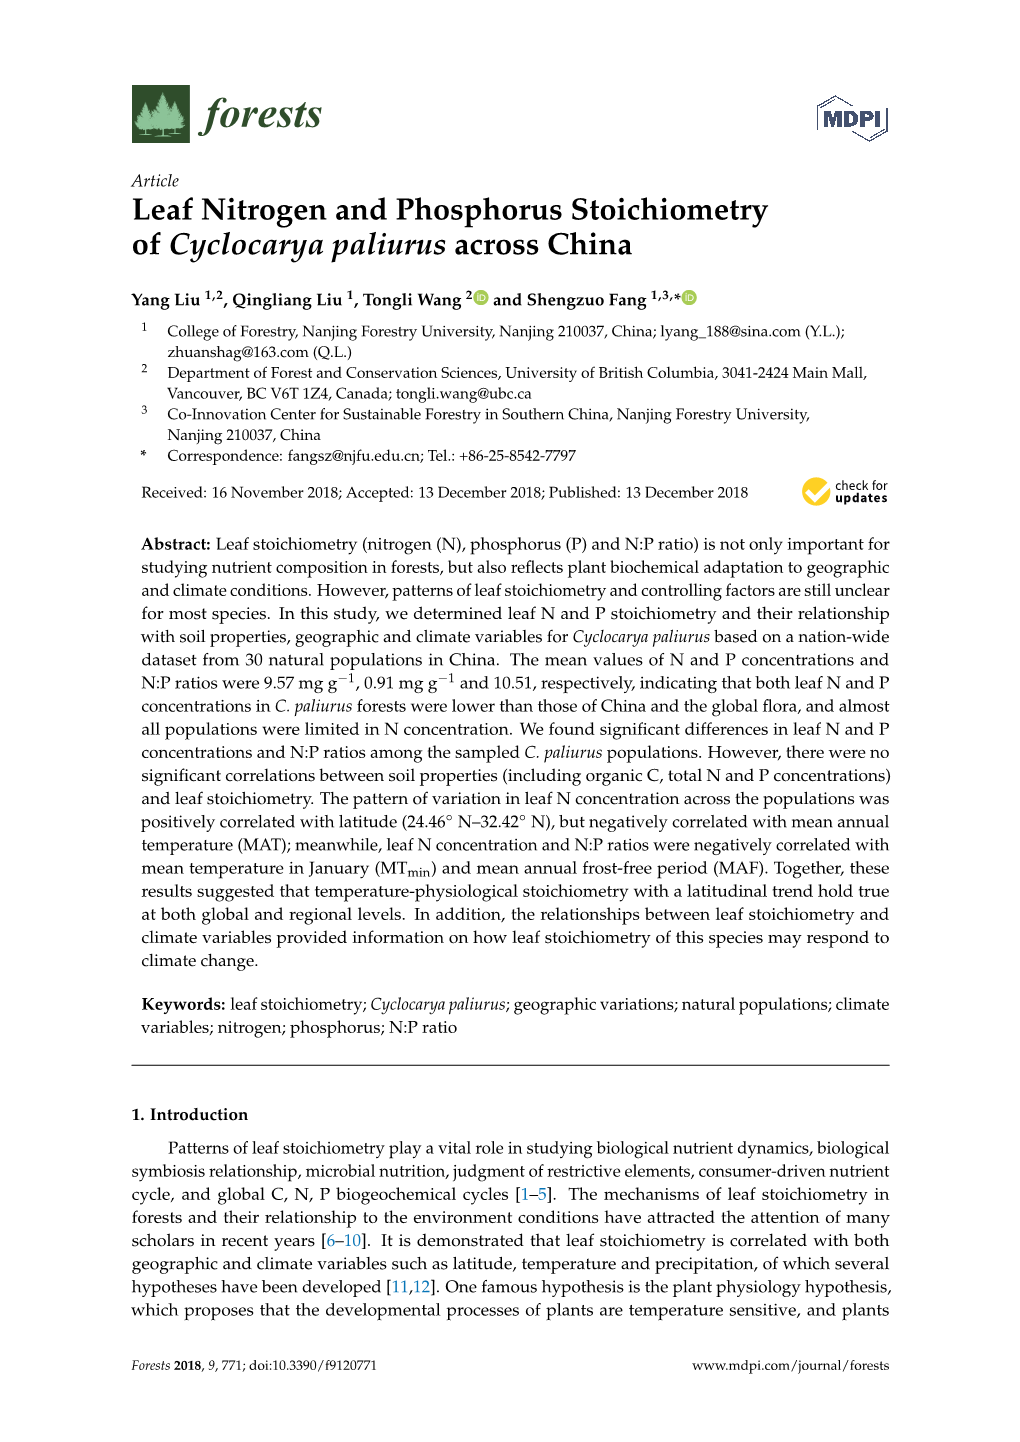 Leaf Nitrogen and Phosphorus Stoichiometry of Cyclocarya Paliurus Across China